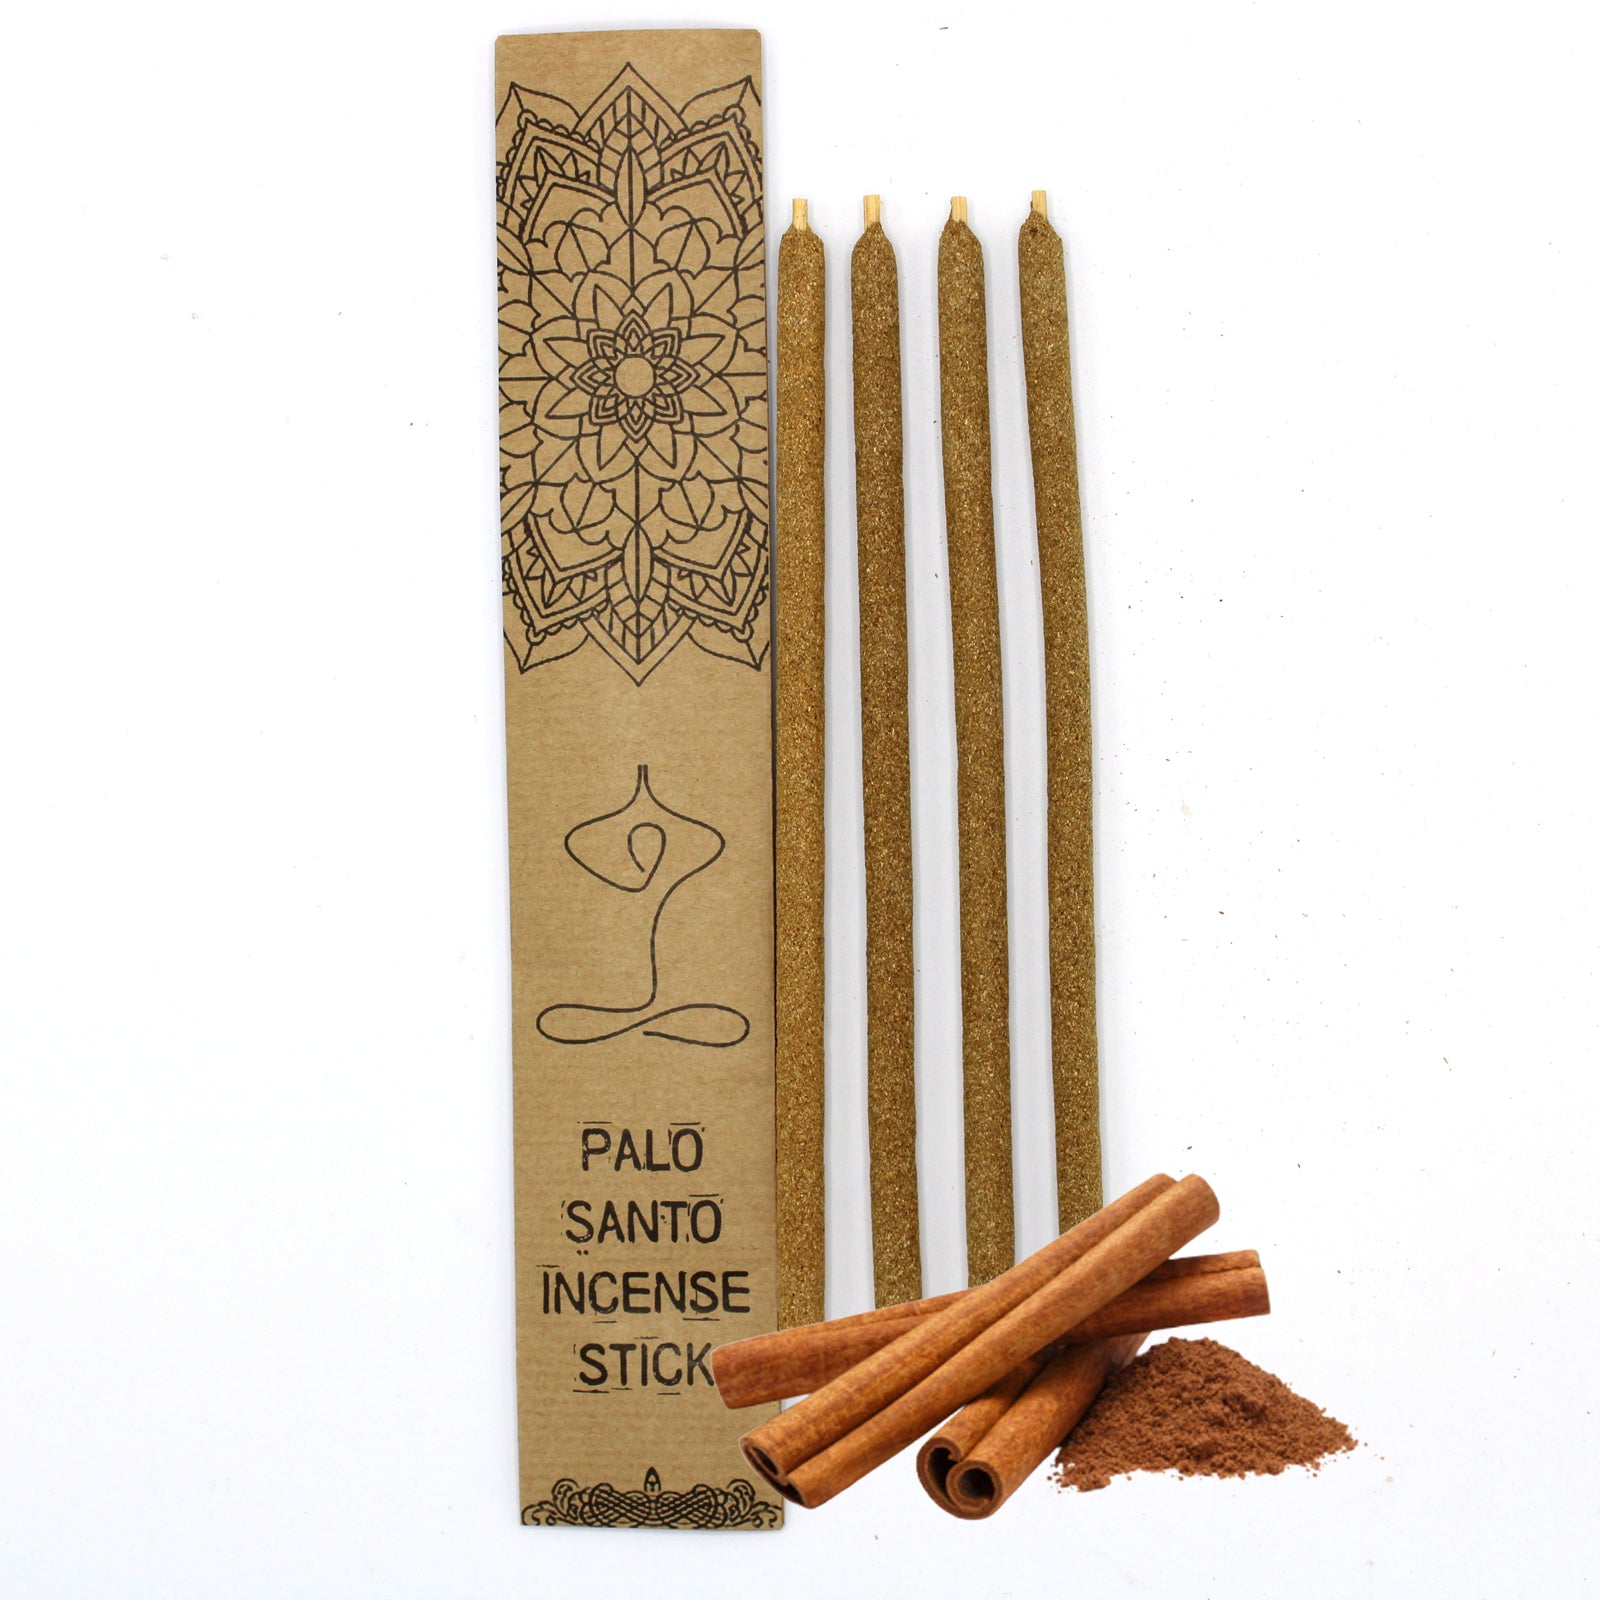 View Palo Santo Large Incense Sticks Cinnamon information